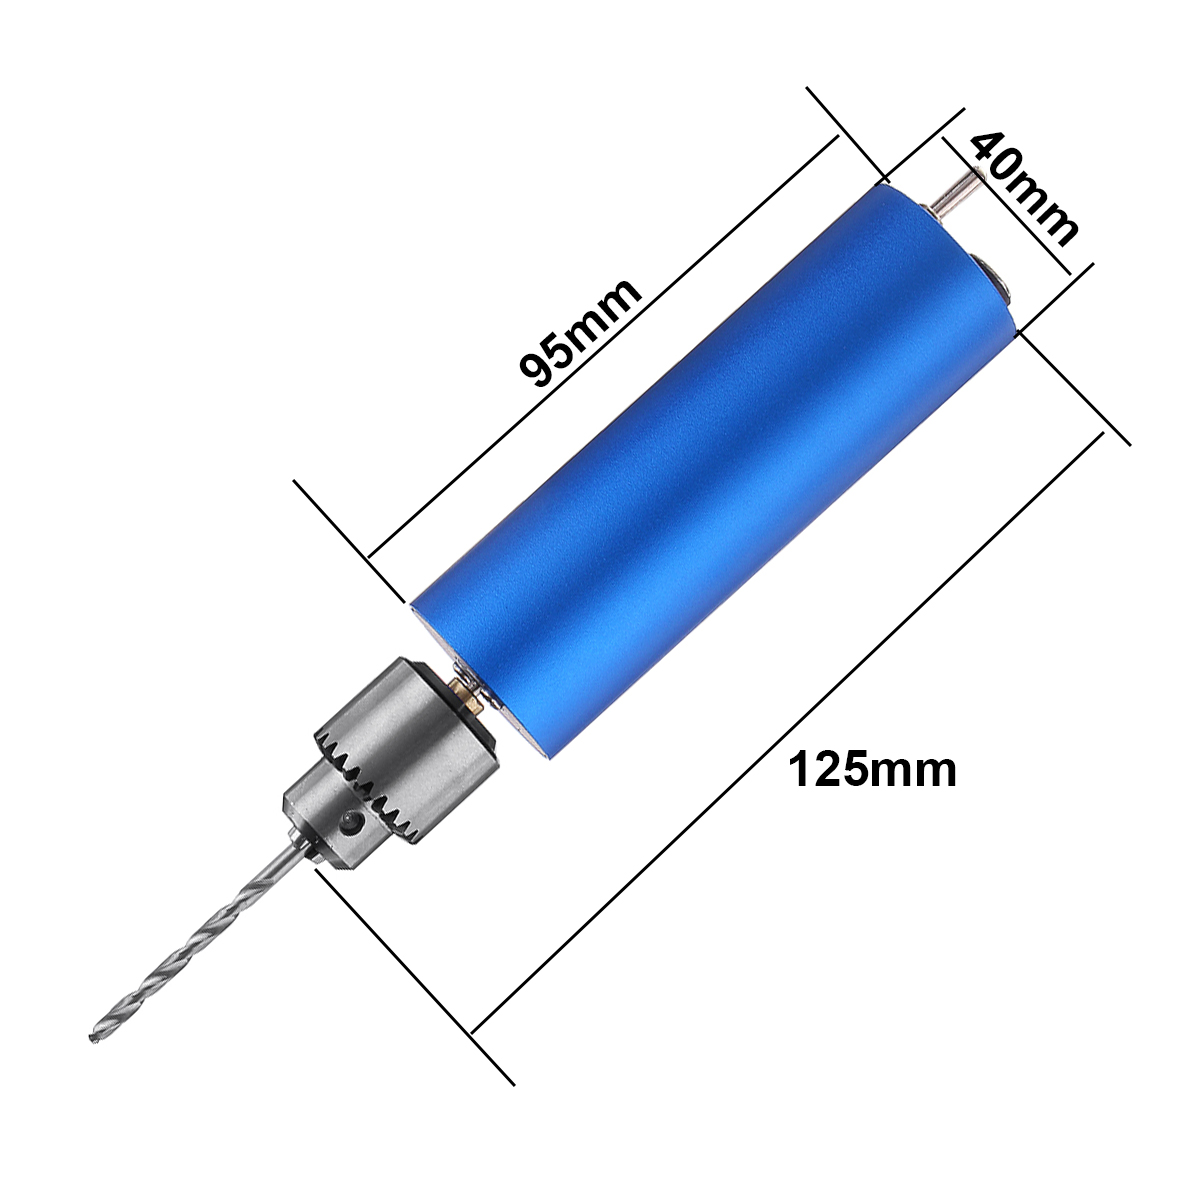 Mini-Electric-Hand-Drill-Grinding-Polishing-Tool-with-DIY-385-Ball-Bearing-Motor-Clamping-03-4mm-1760090-3